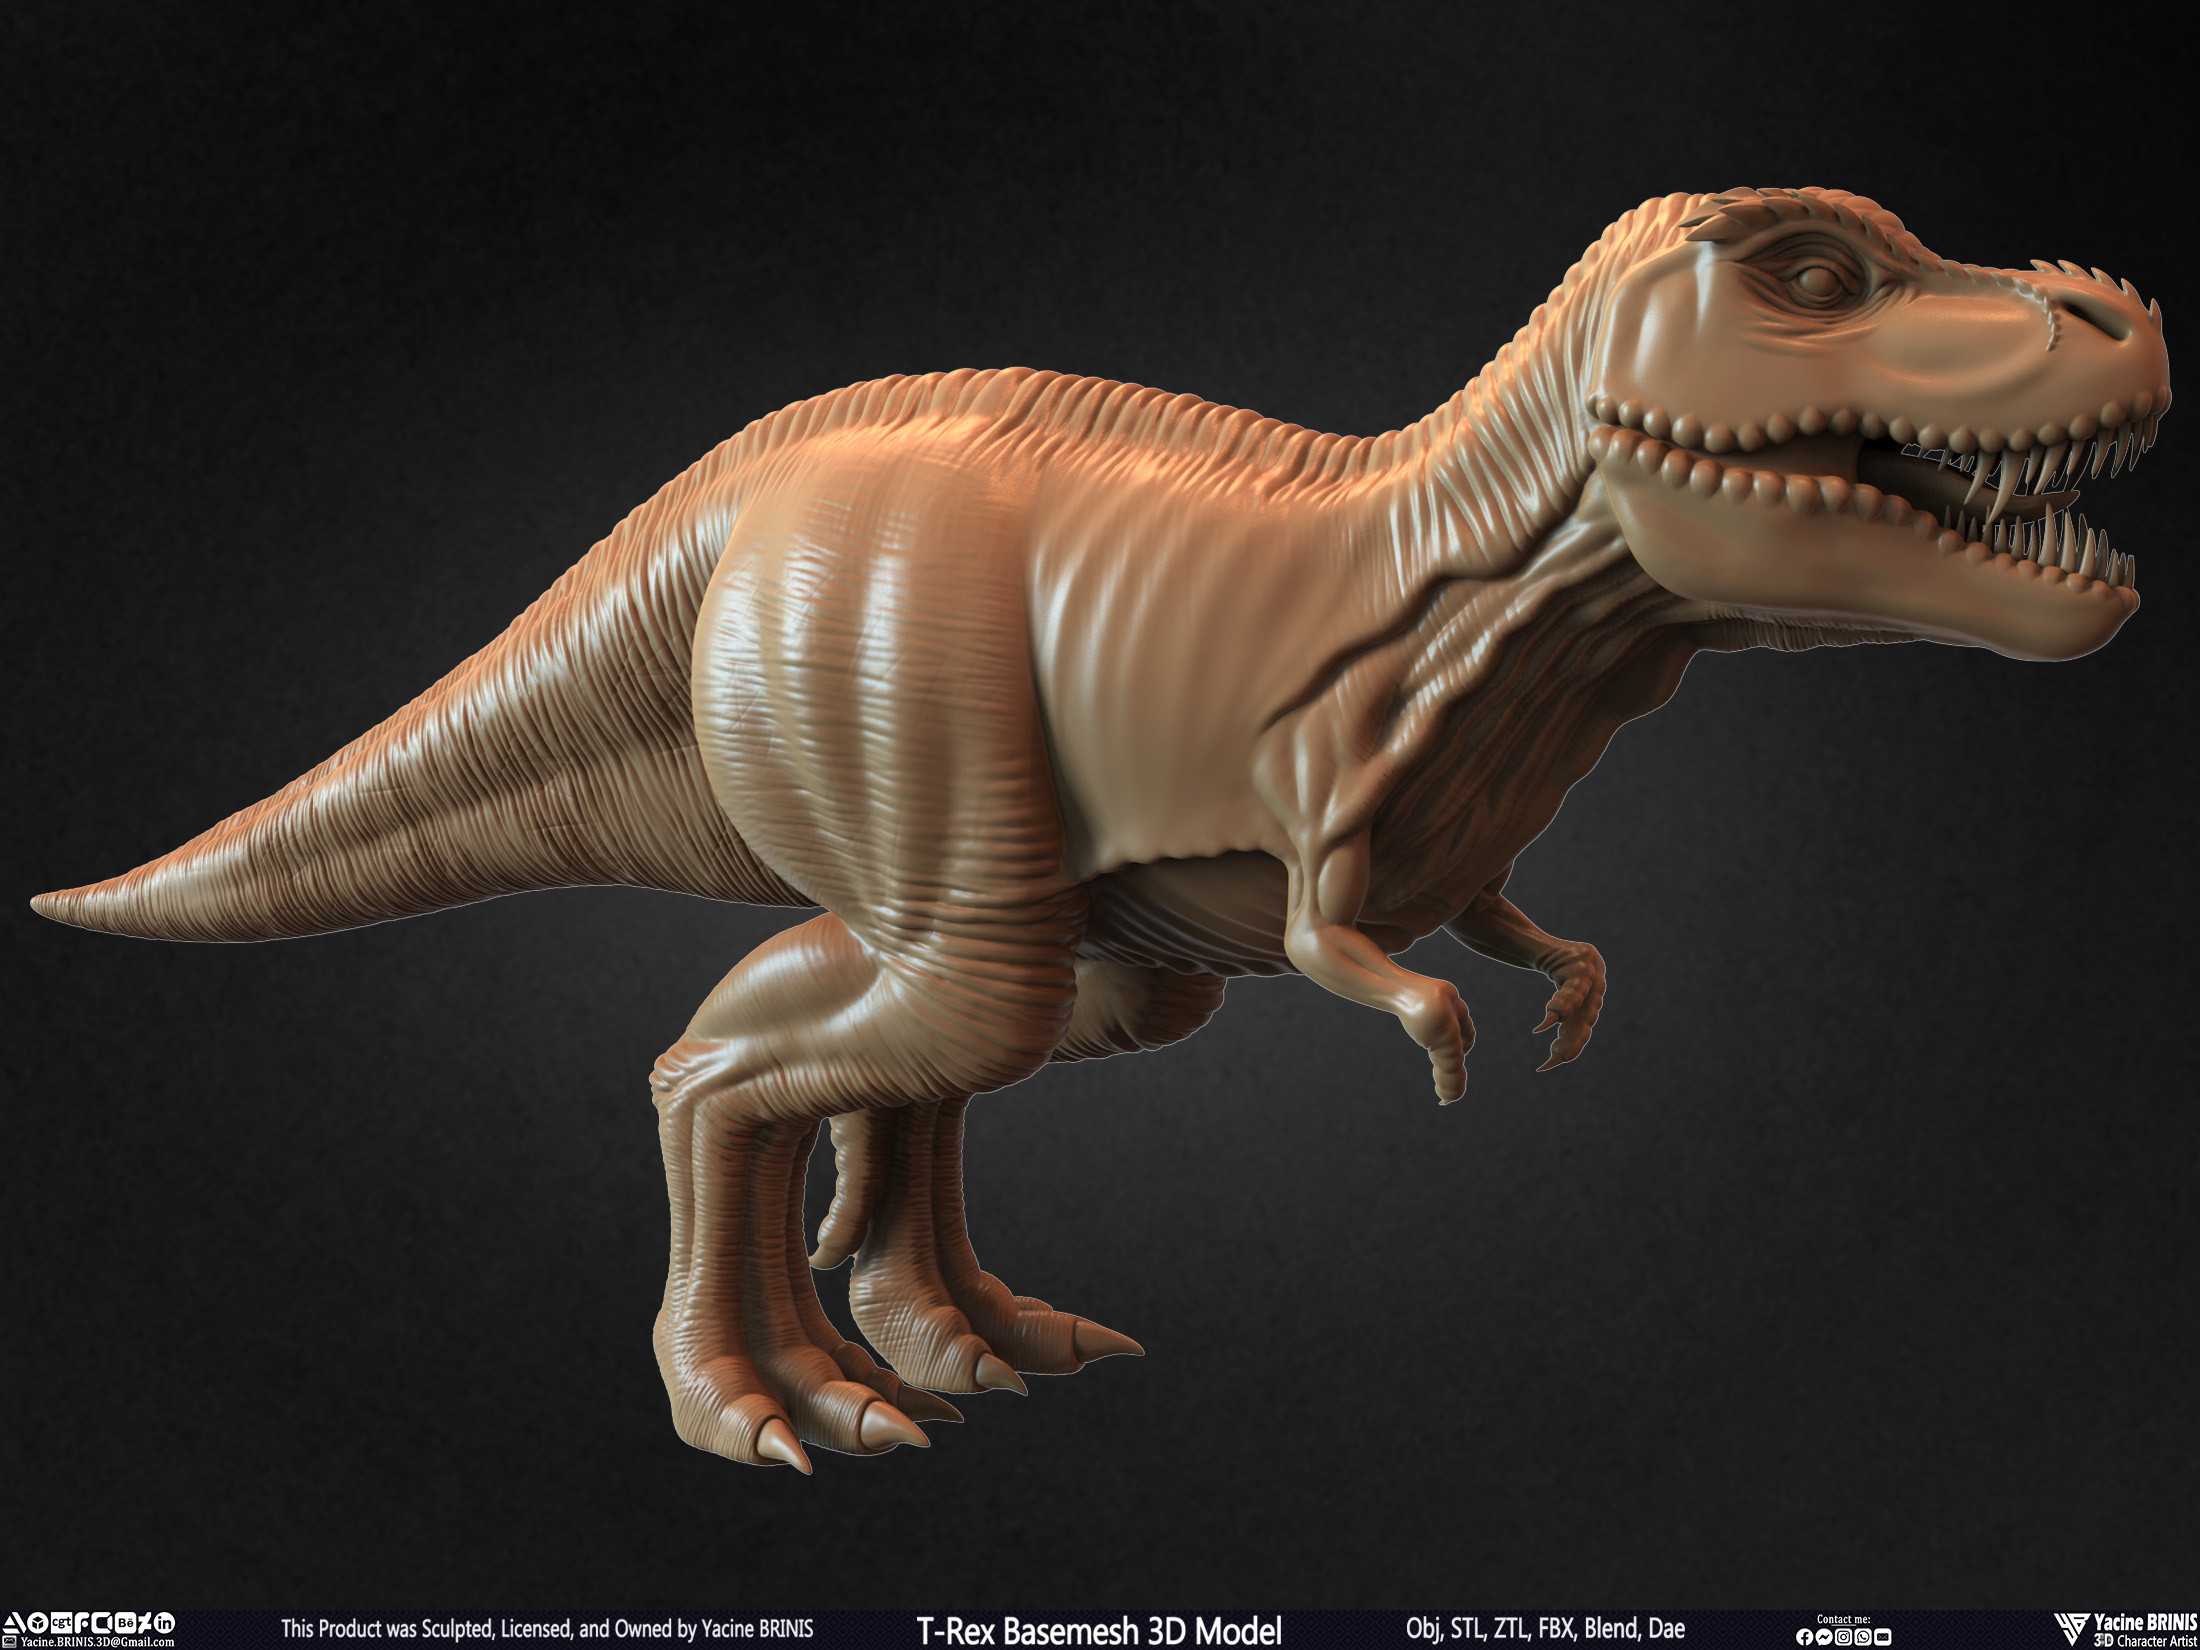 T-Rex Basemesh 3D Model (Tyrannosaurus Rex) Sculpted By Yacine BRINIS Set 005